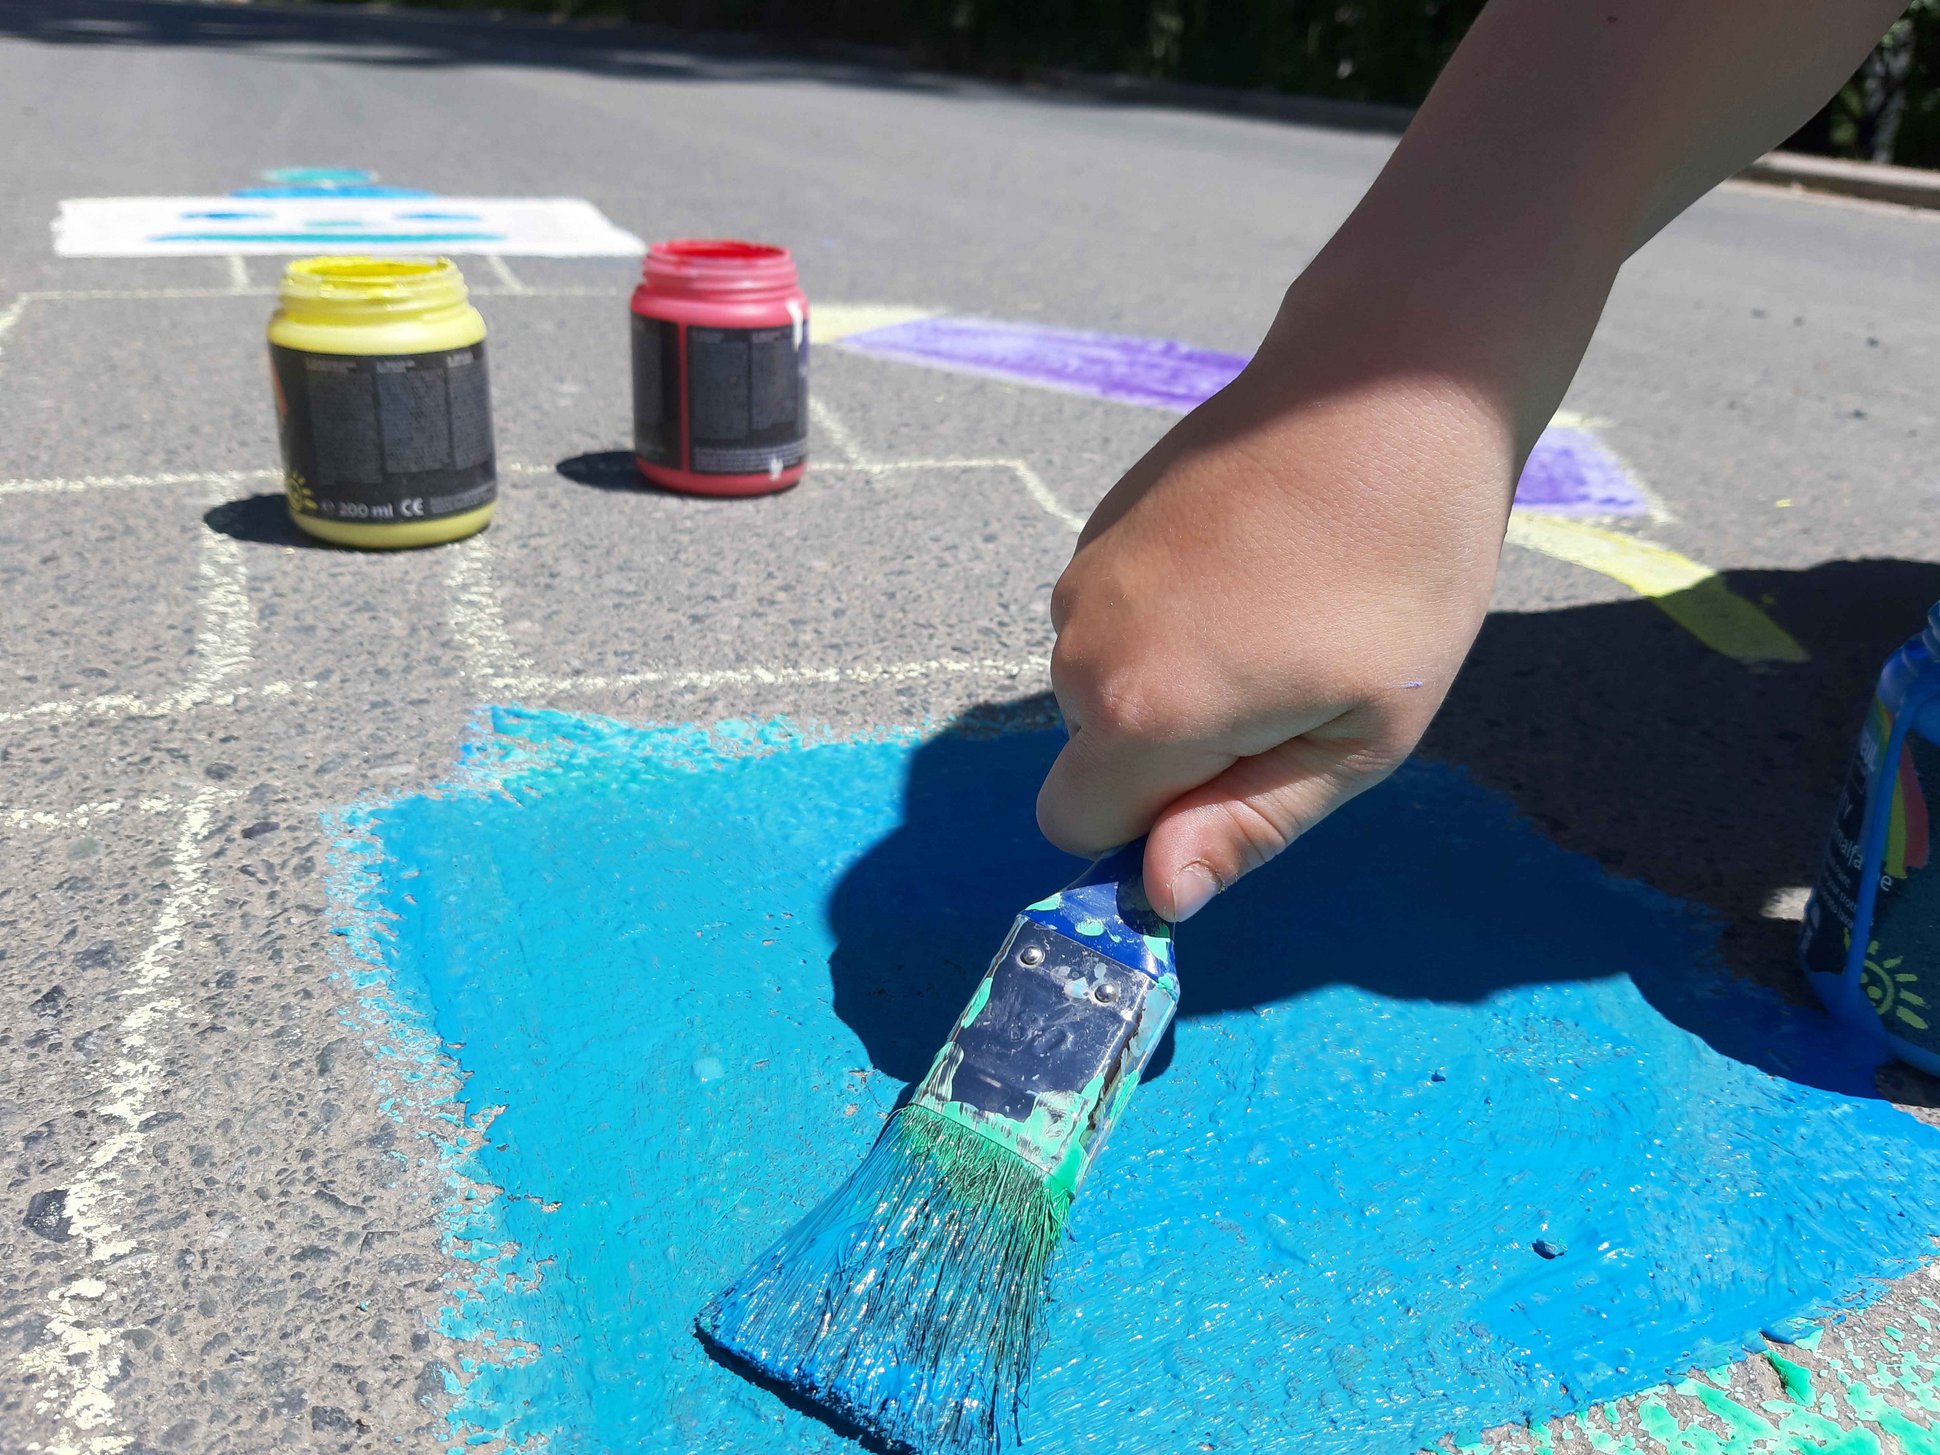 KREUL Strassenkreide Kinder malen Sommer outdoor draussen Farbe